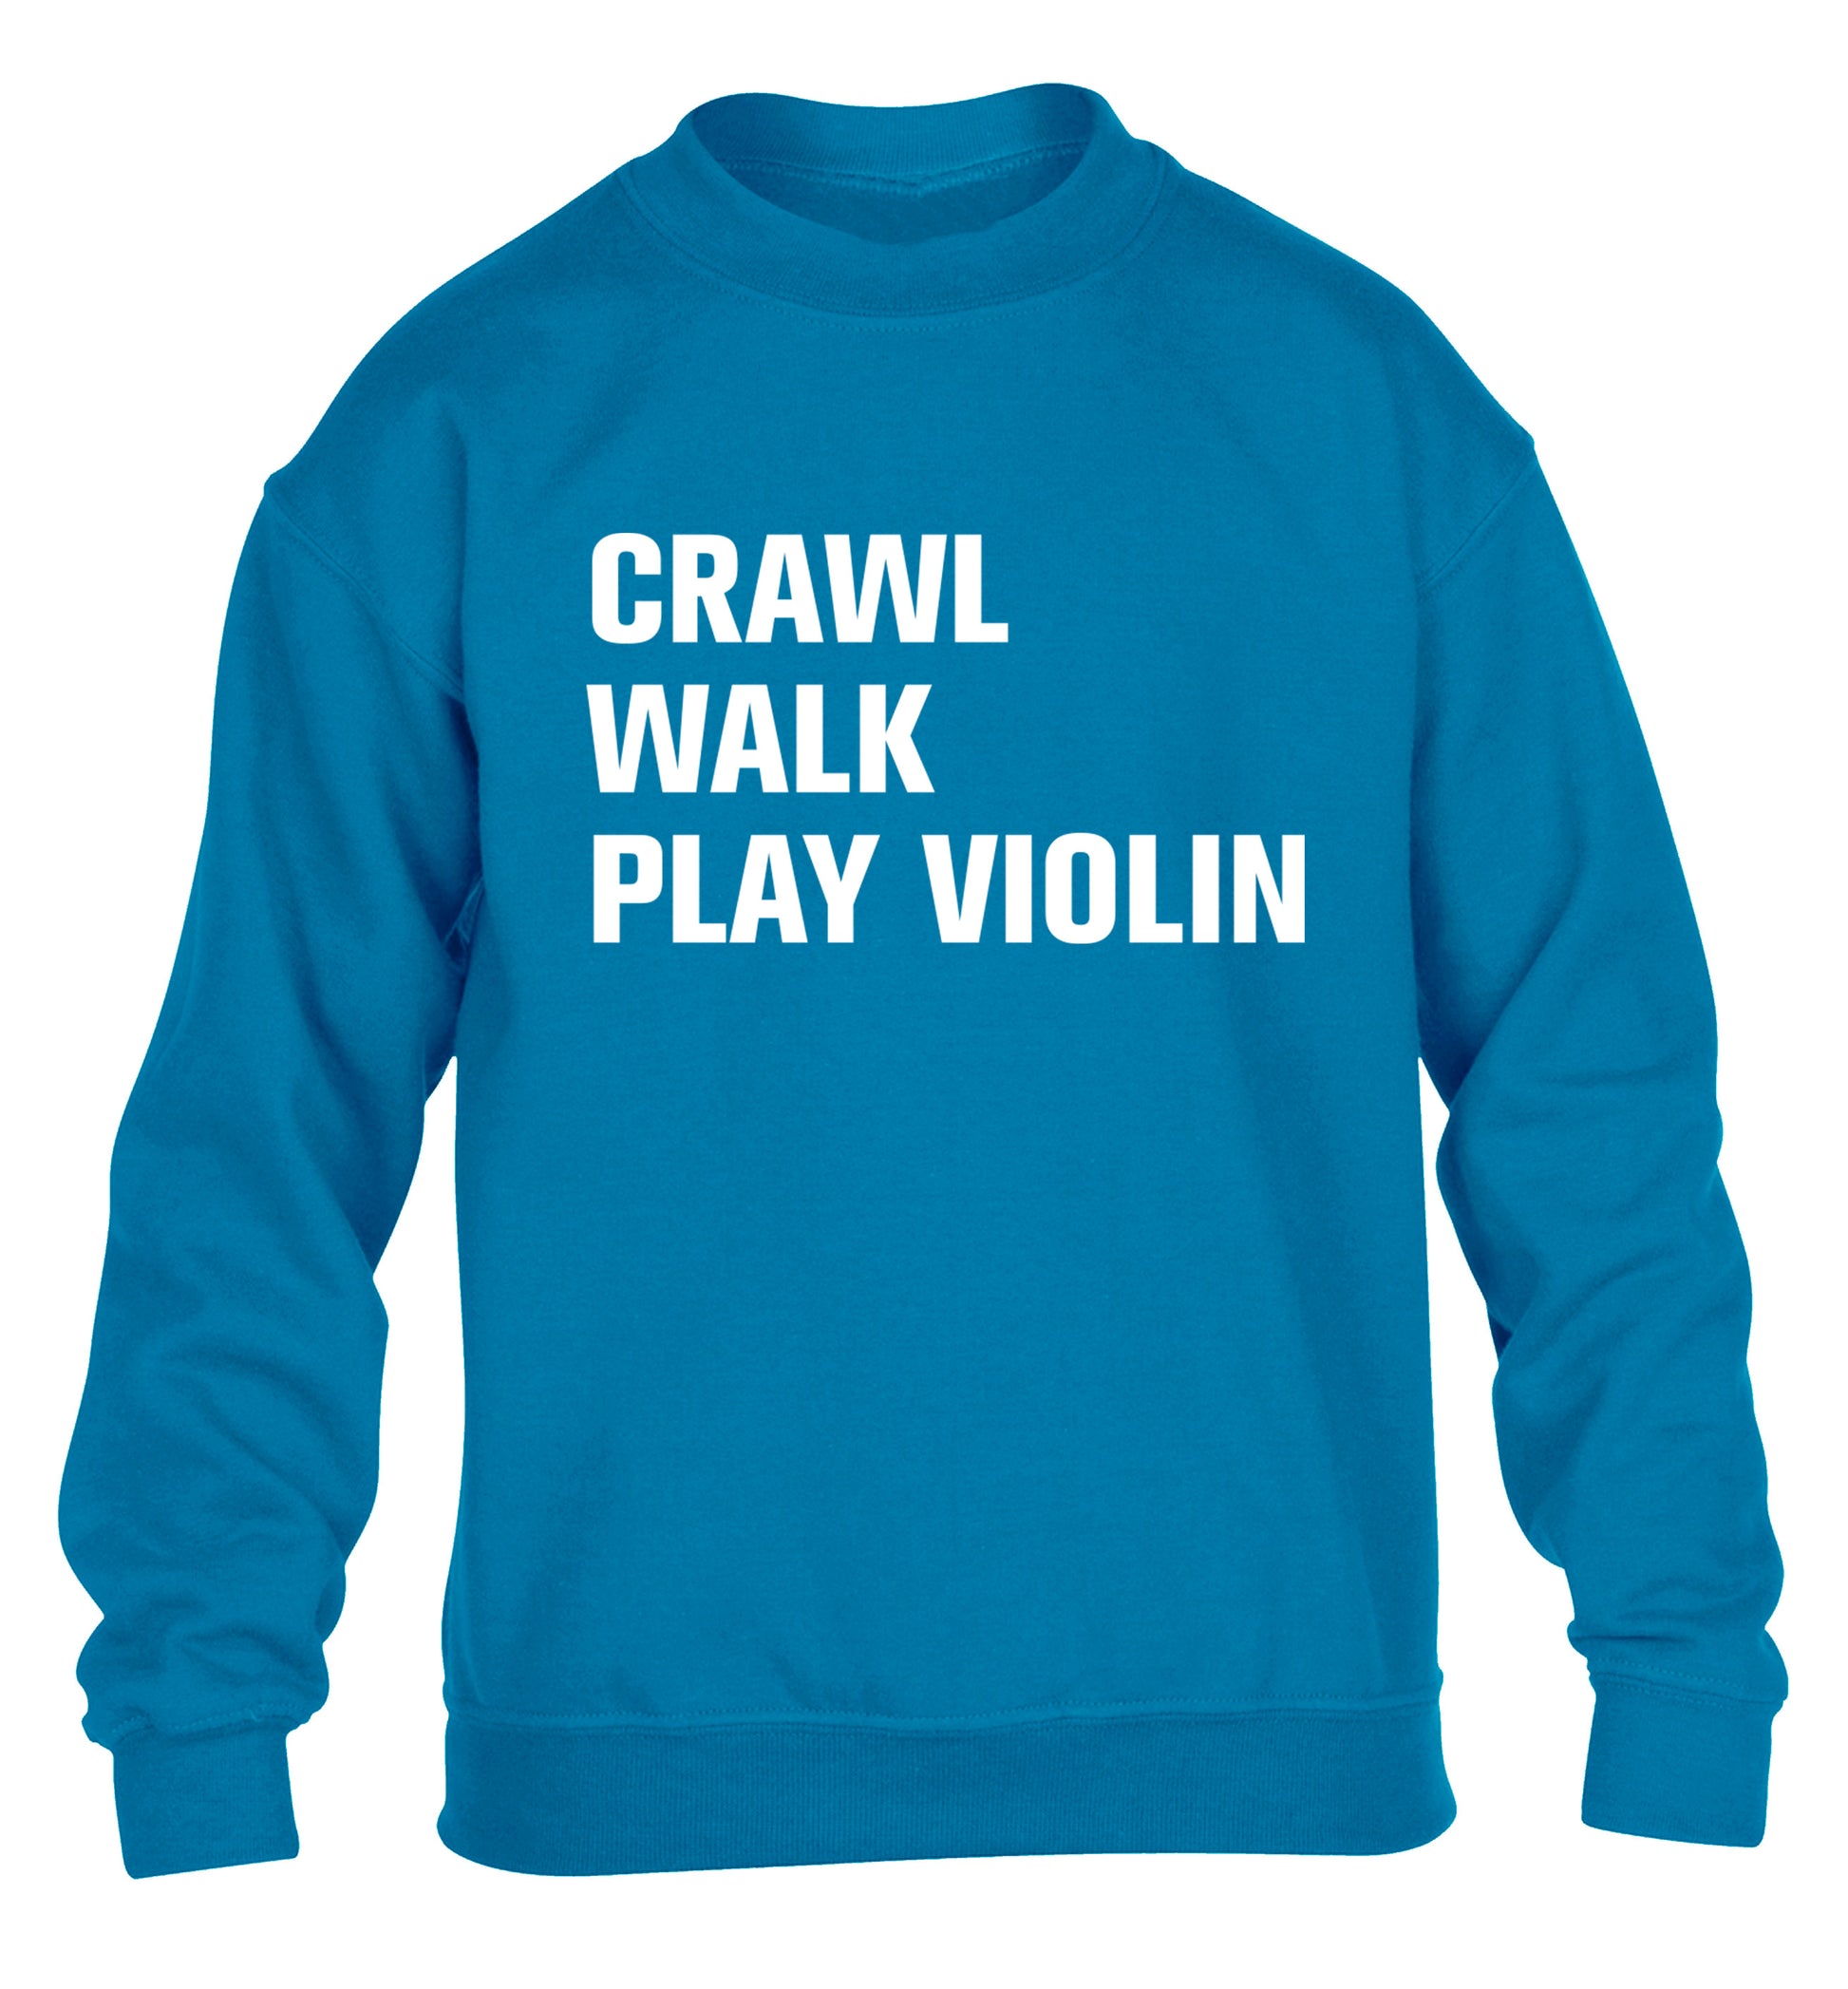 Crawl Walk Play Violin children's blue sweater 12-13 Years